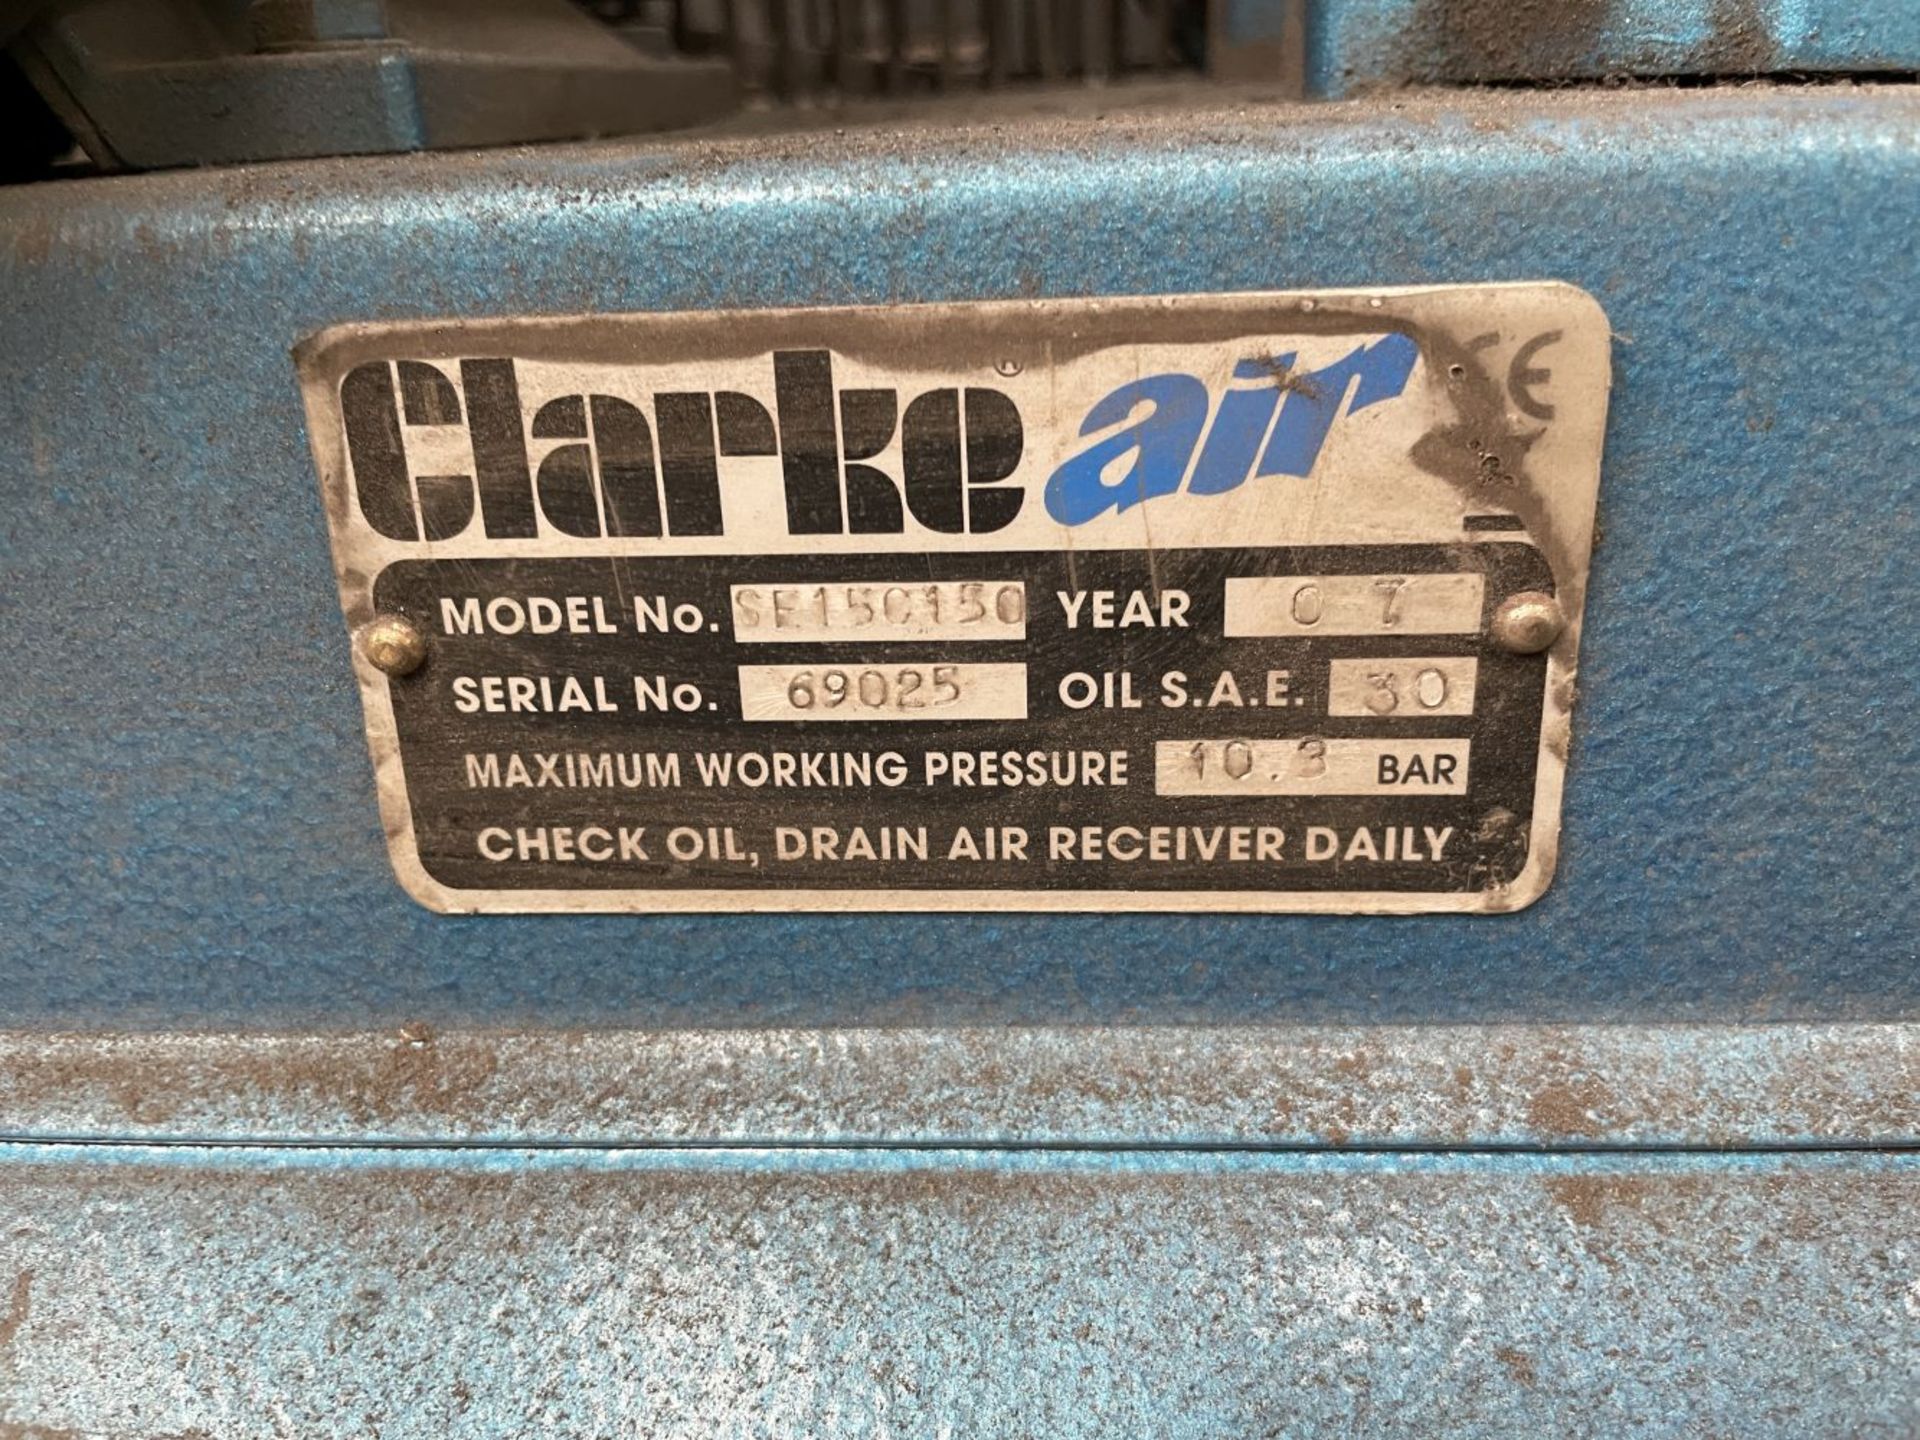 Clarke SE15C 150 Horizontal Receiver Mounted Air Compressor, serial no. 69025, 240V, lot located - Image 2 of 2